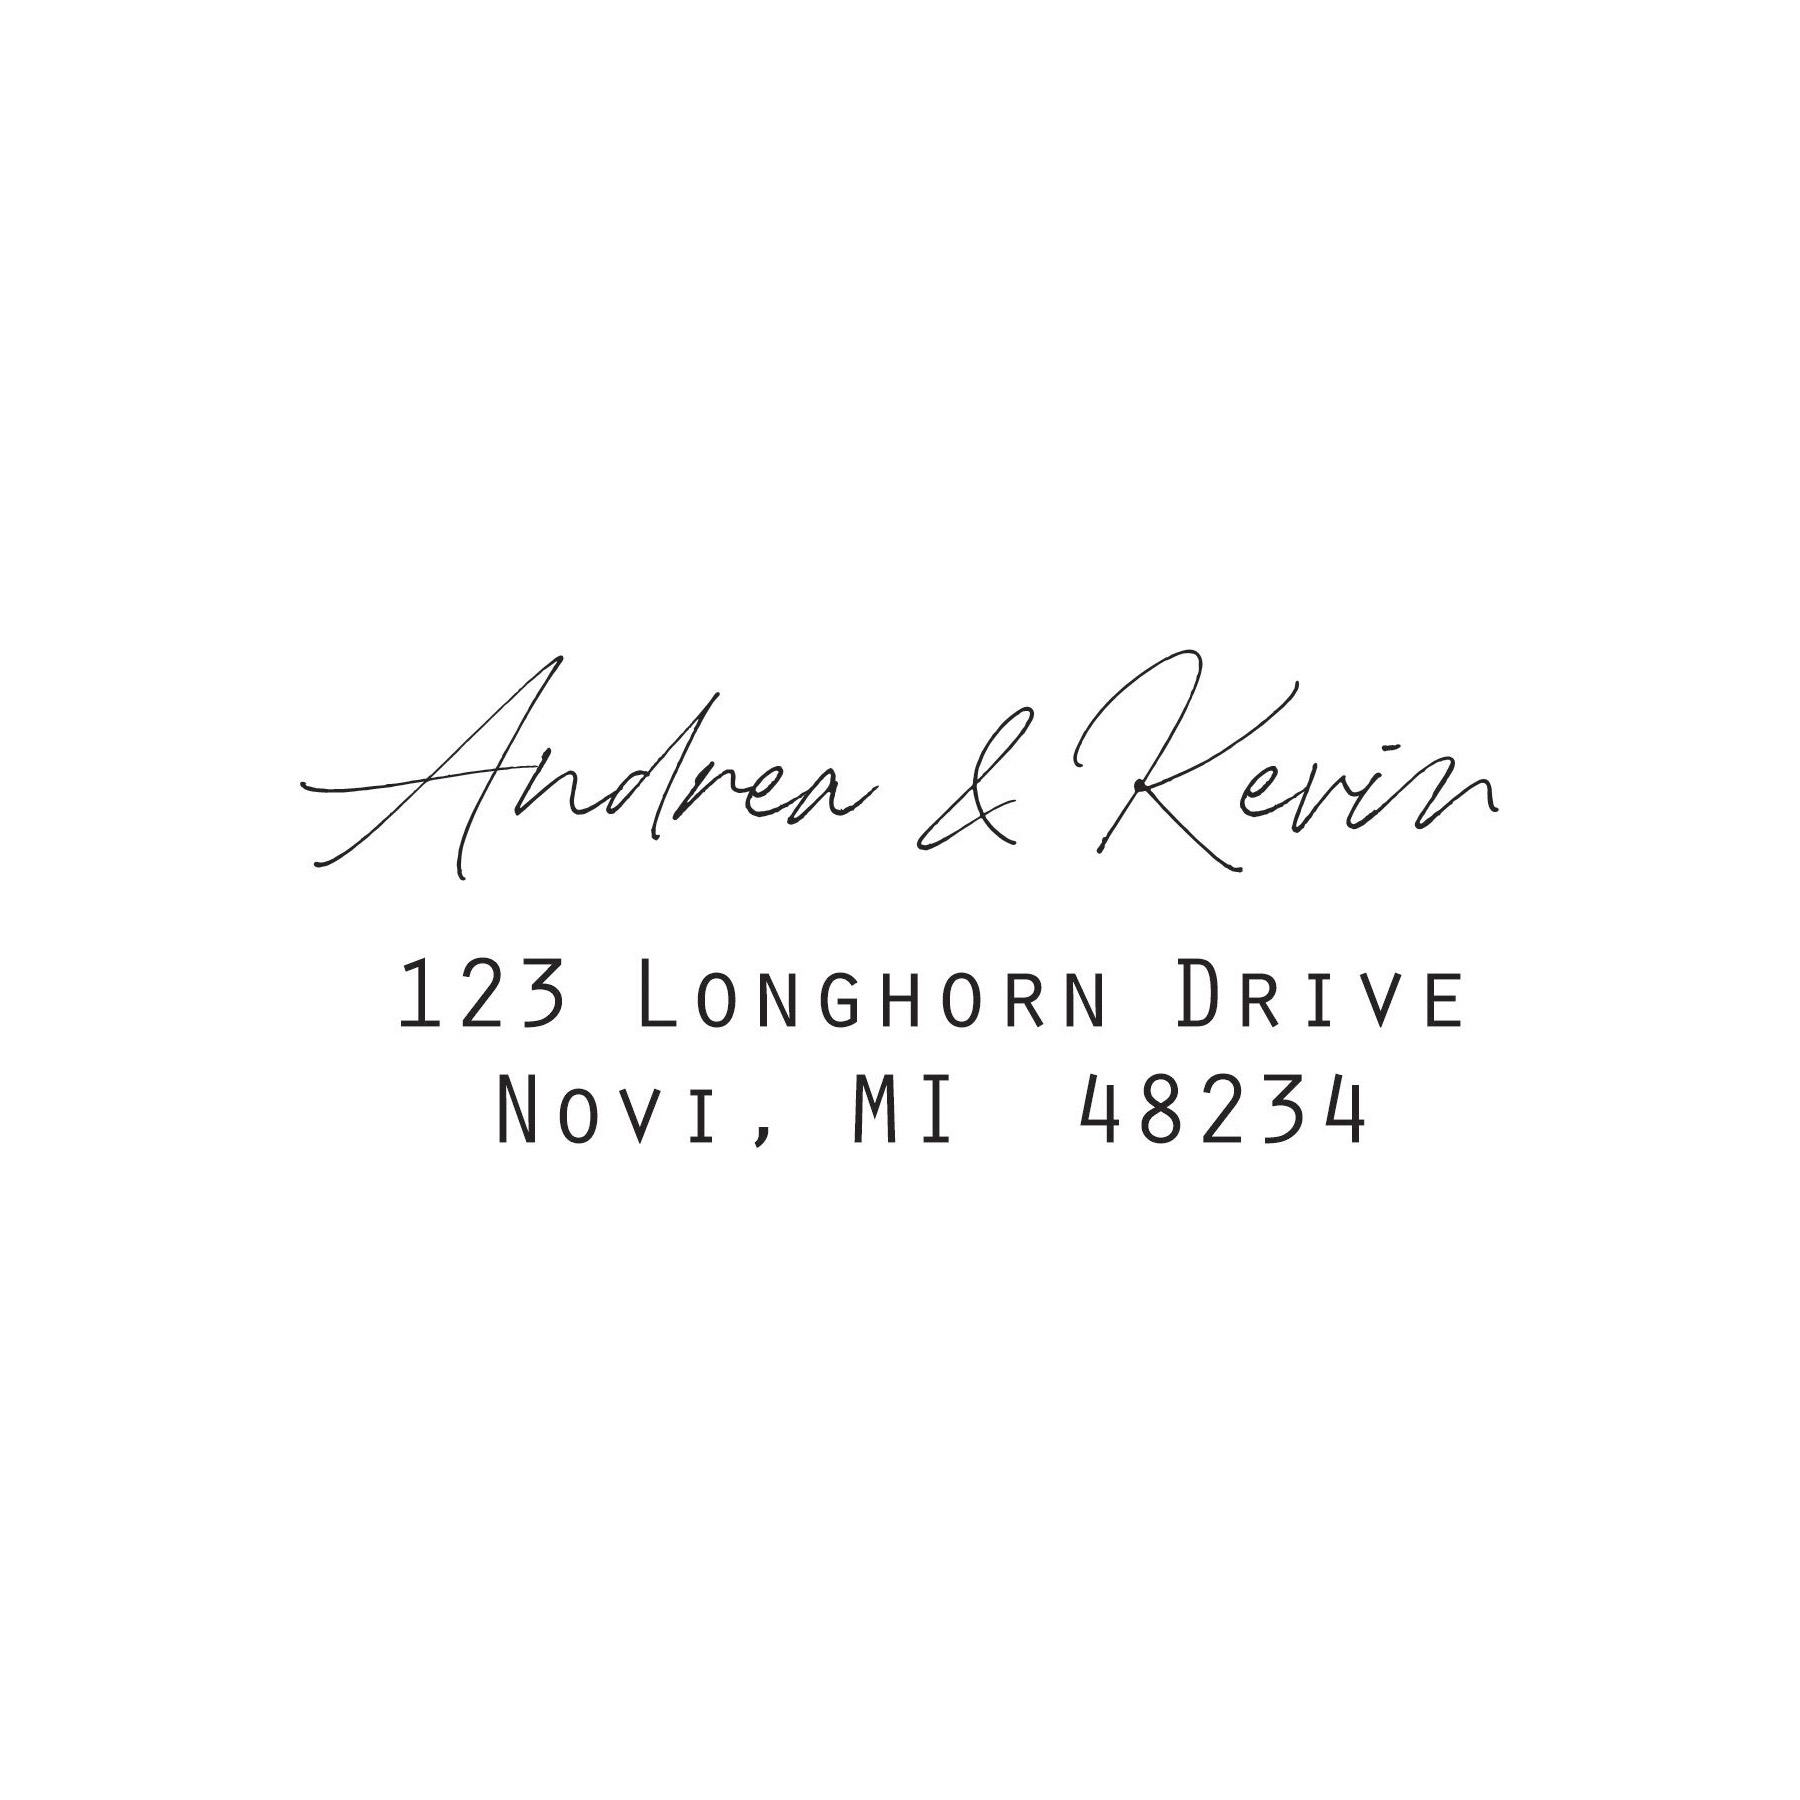 Wedding Stamp D - Address